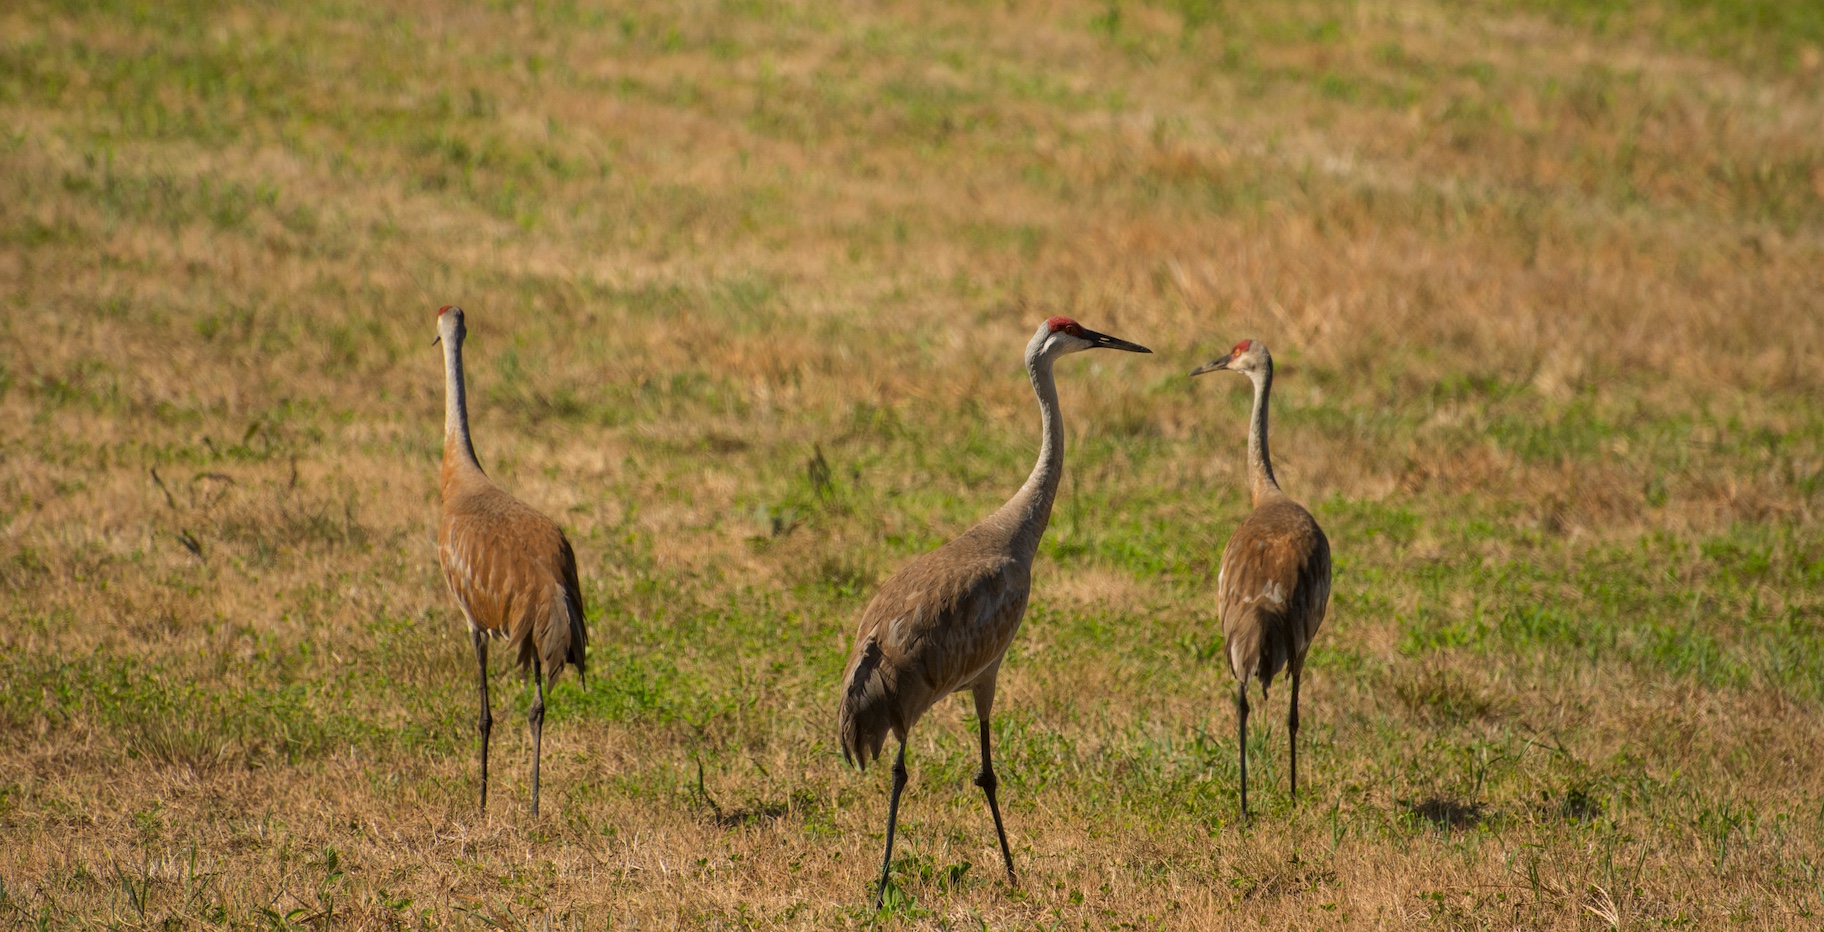 Three sandhill cranes standing in a field of grass.